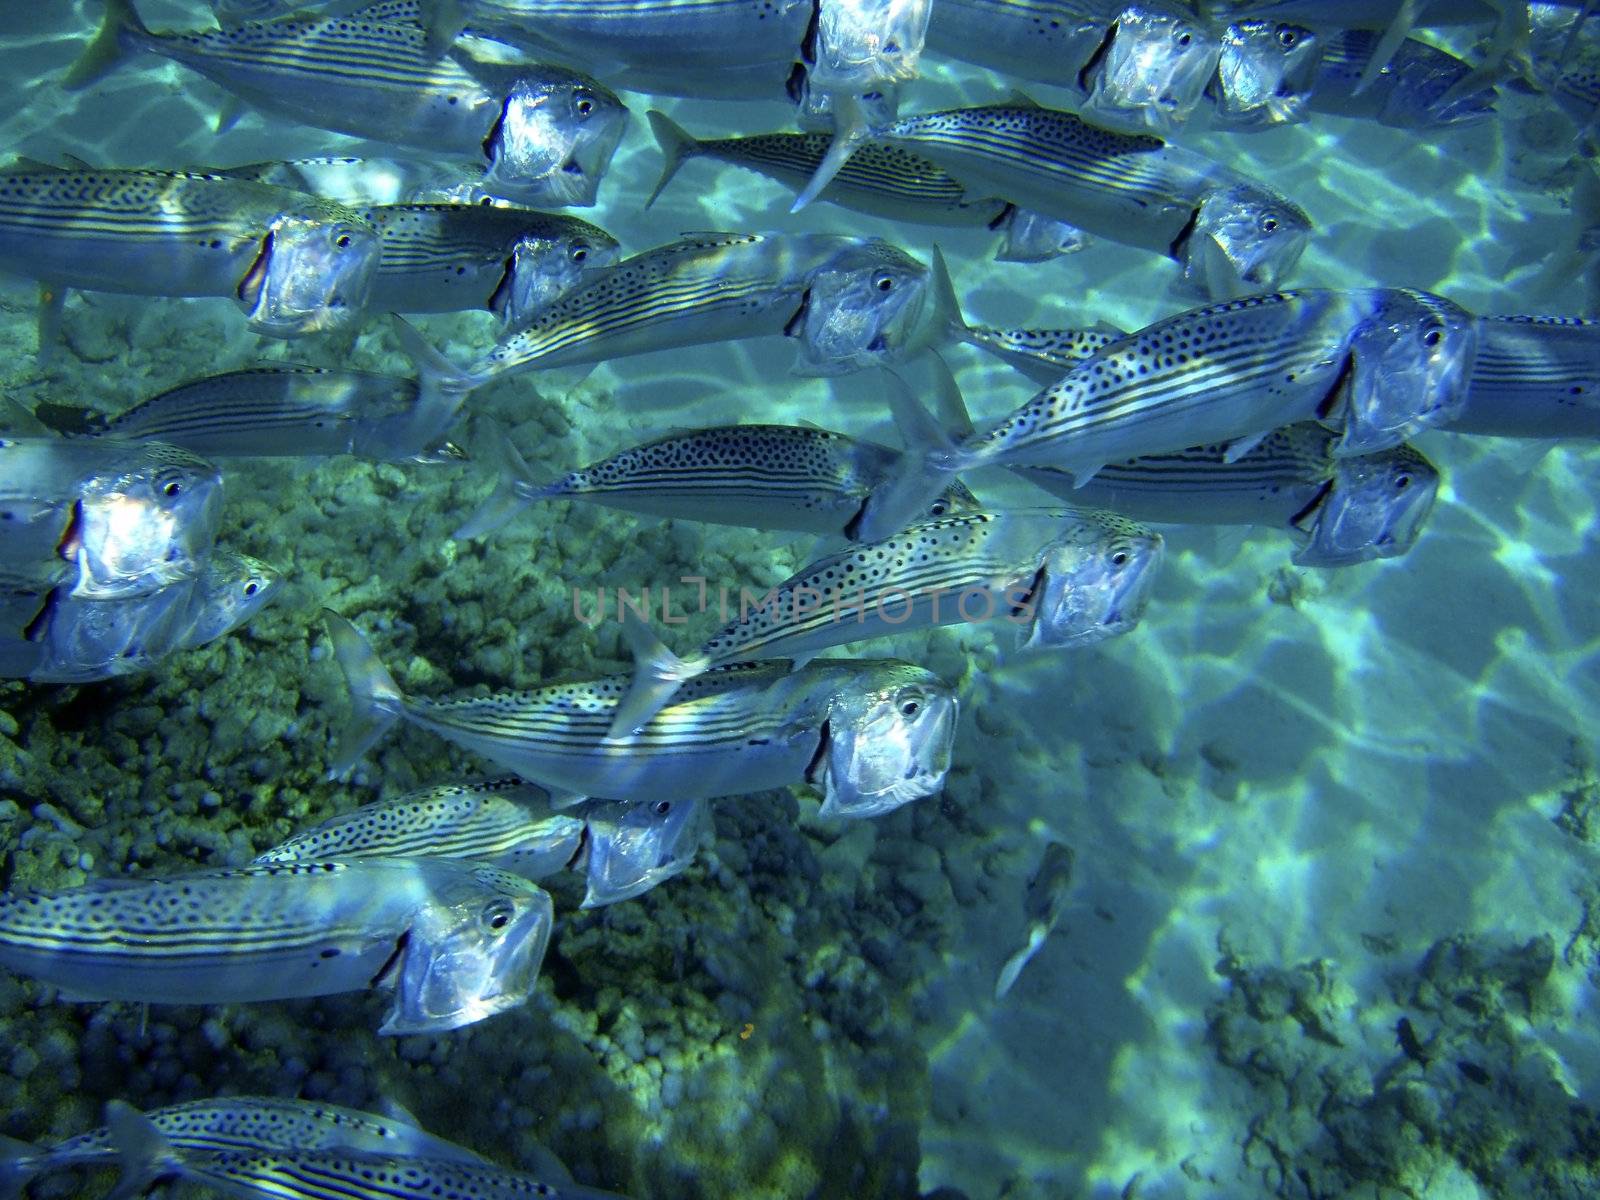 Underwater close up of fish school feeding. Red Sea, Egypt.